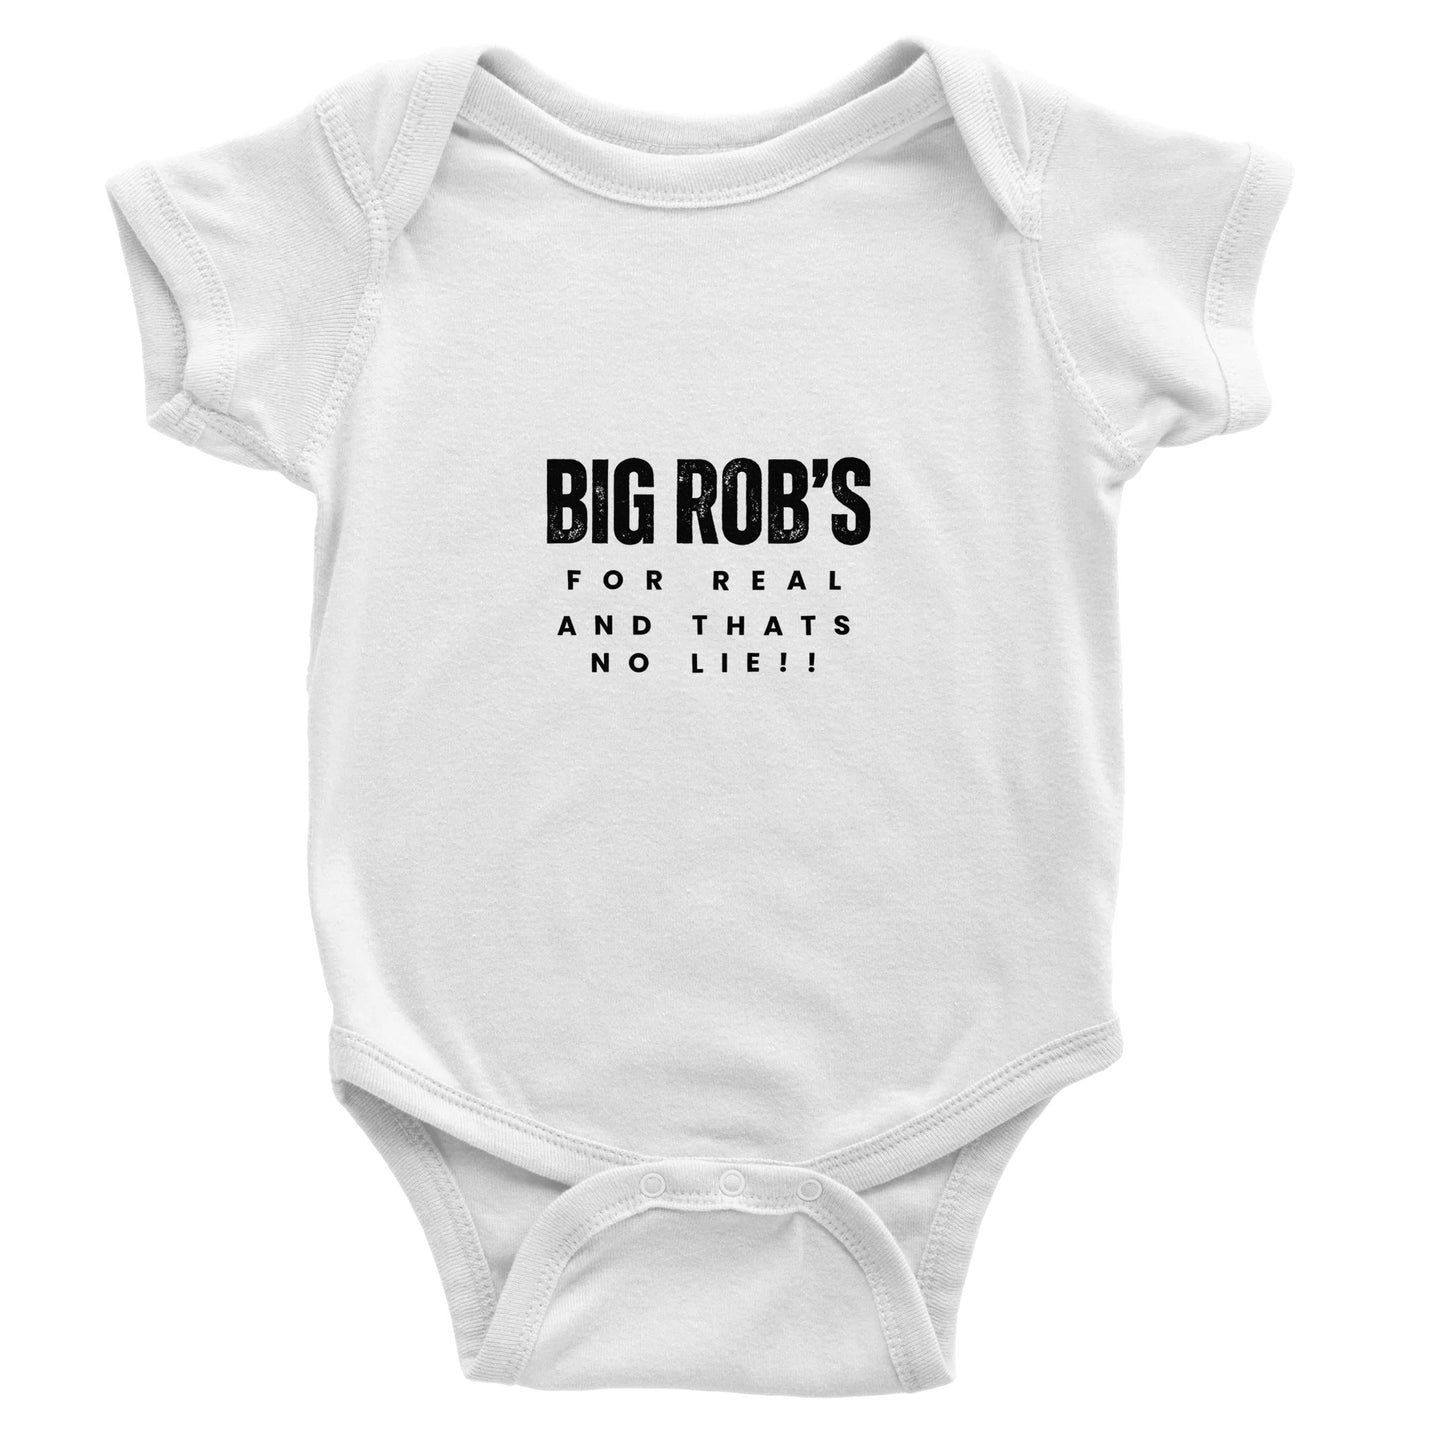 Kids & baby clothing